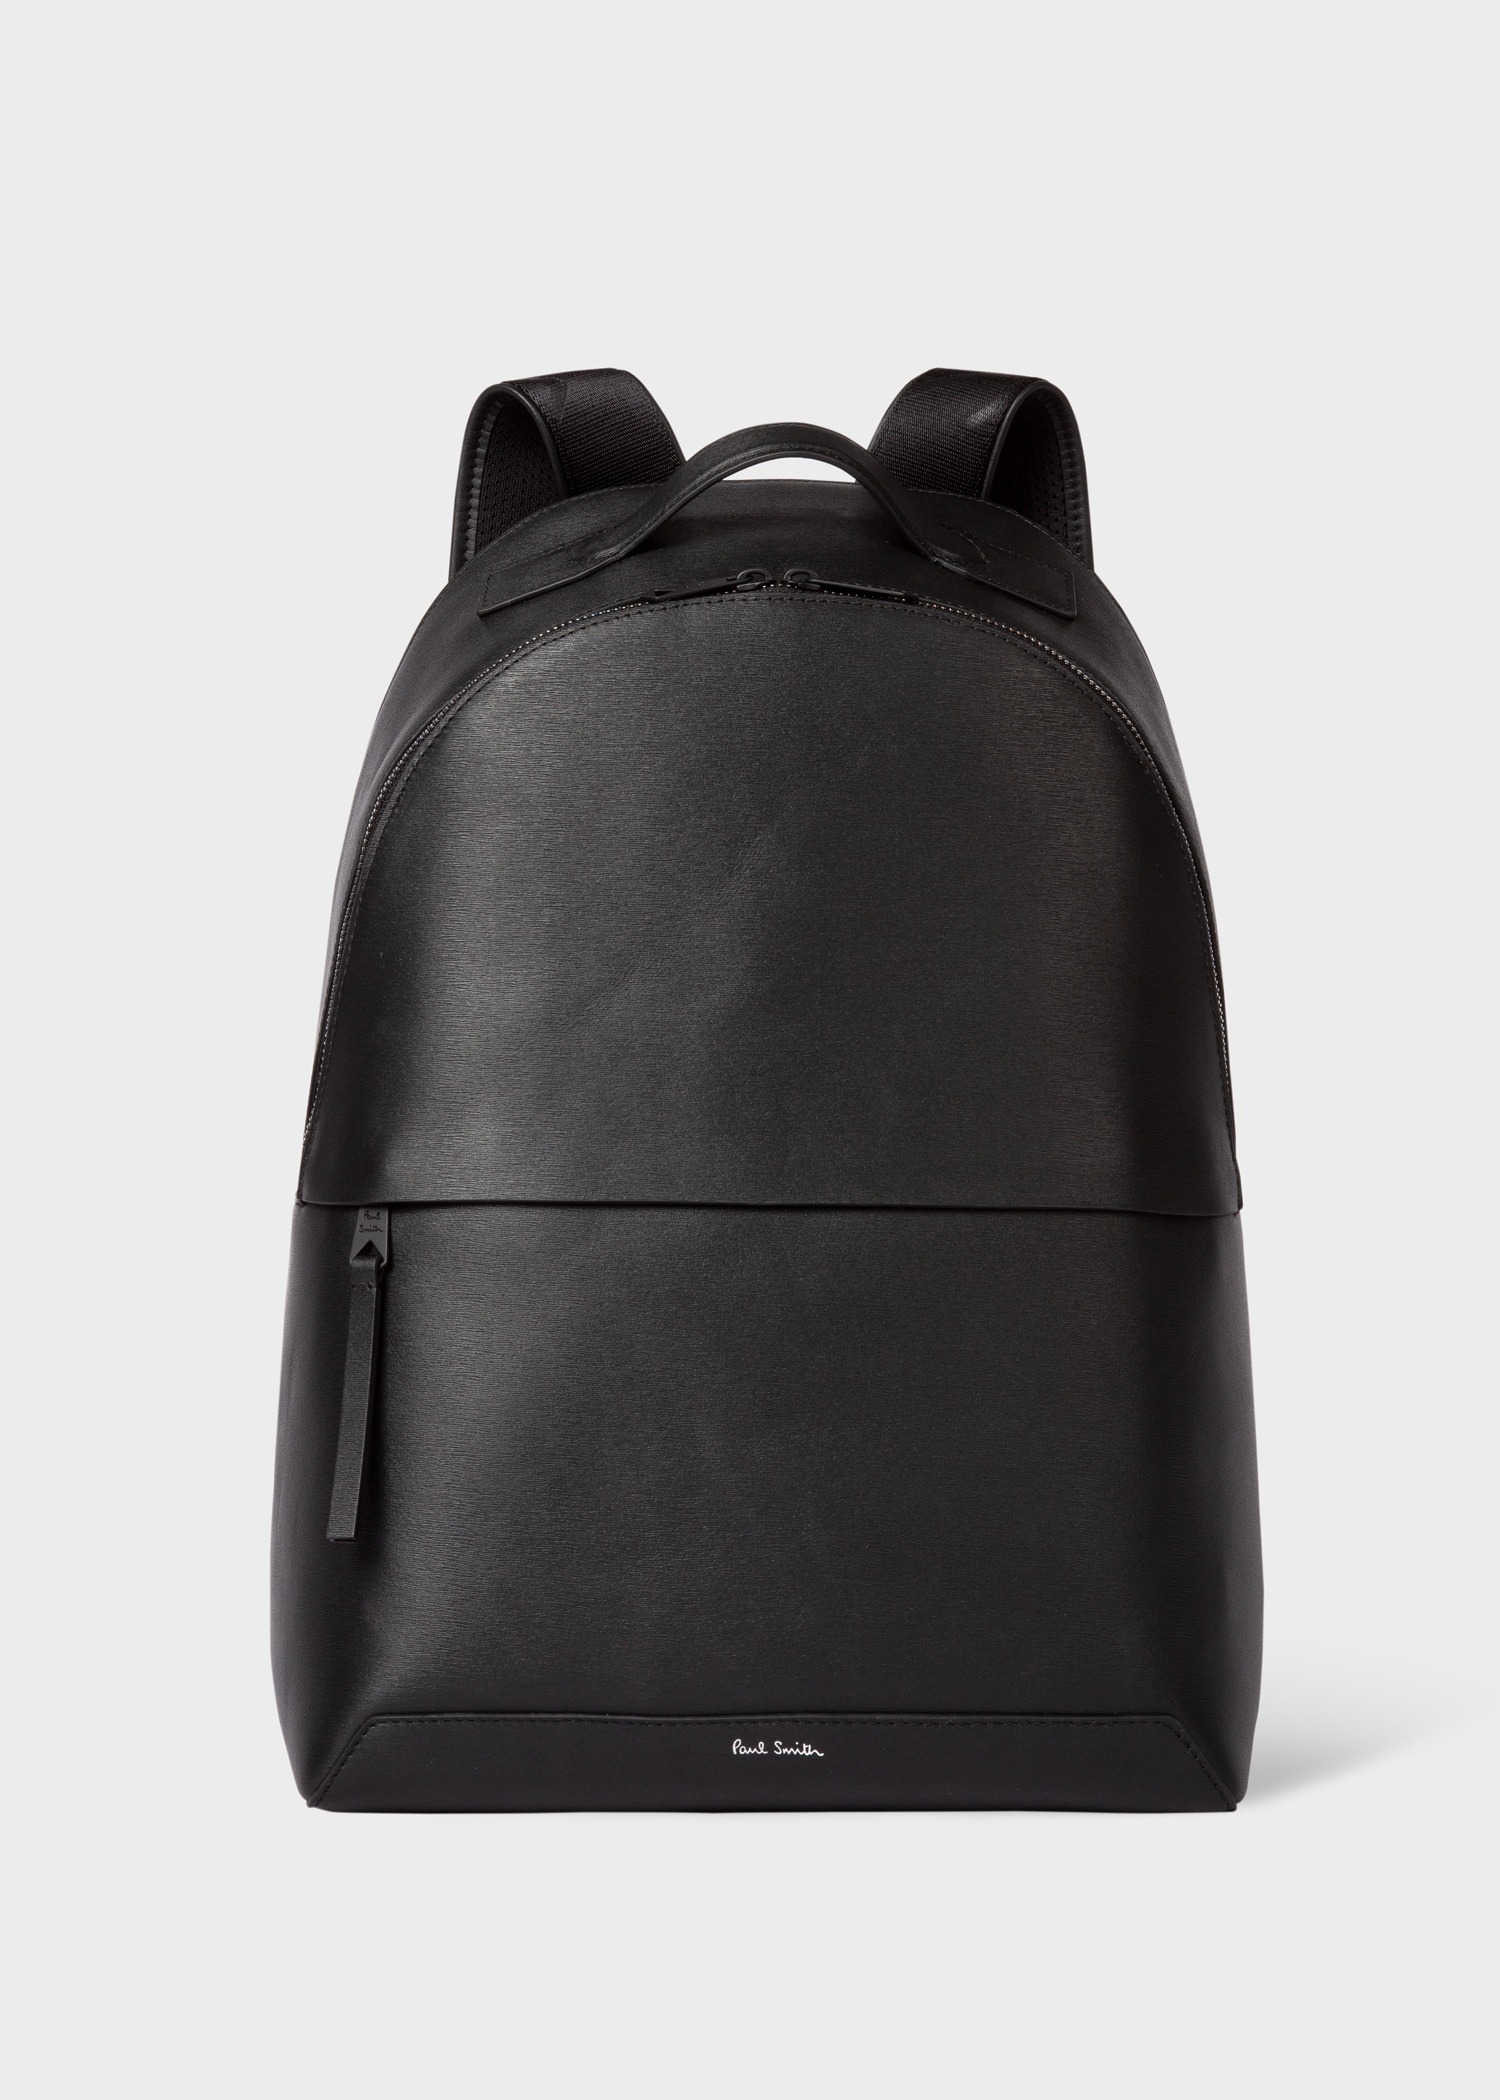 Black Embossed Leather Backpack - 1